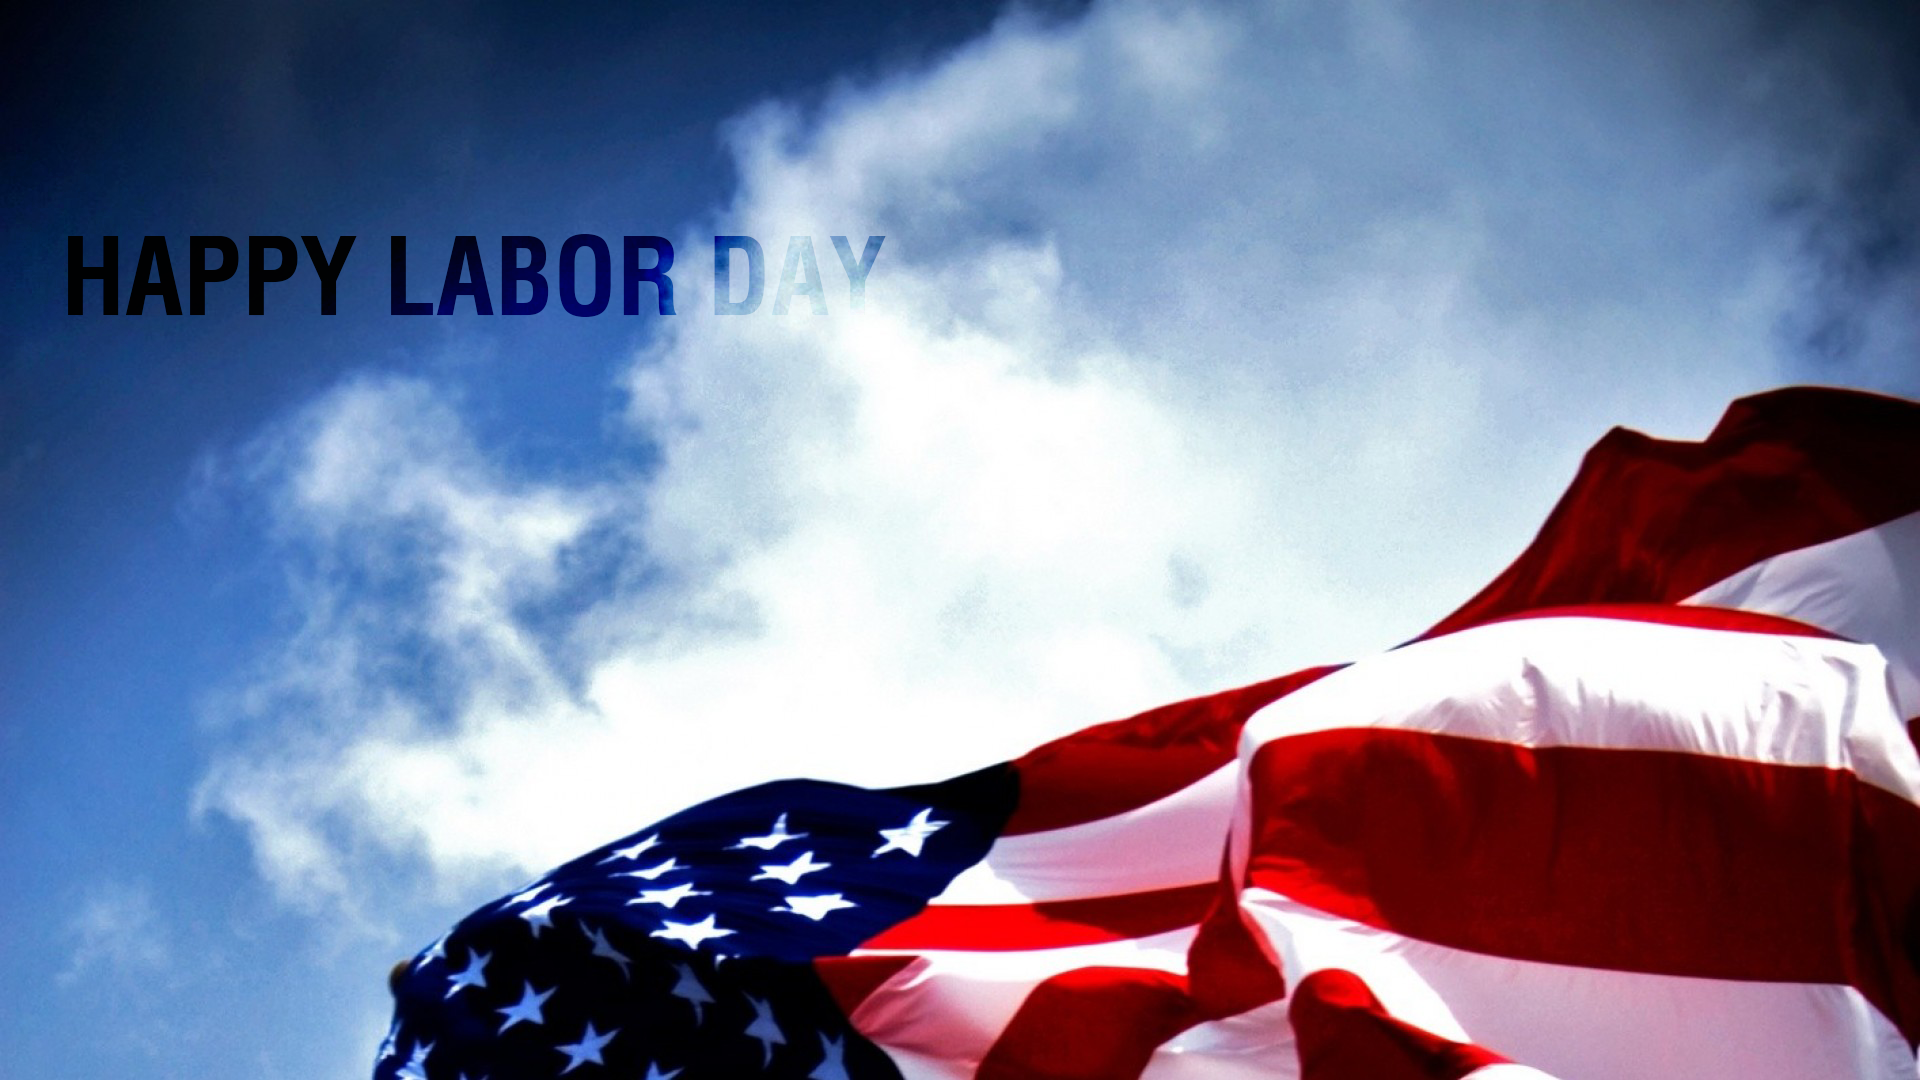 Happy Labor Day HD Wallpaper Free Download